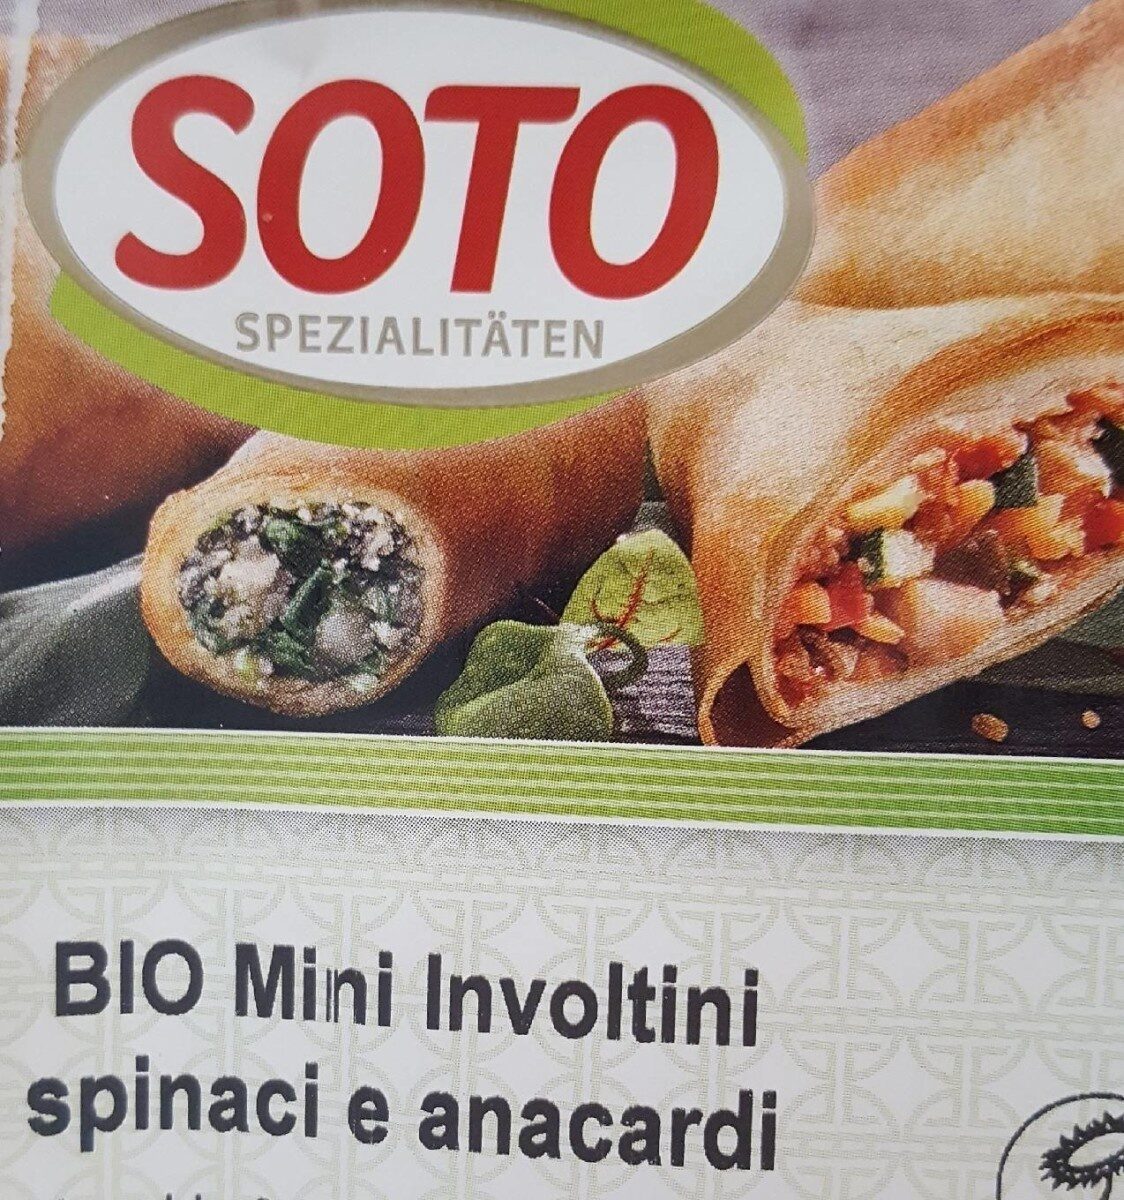 Mini involtini spinaci e anacardi - Product - it